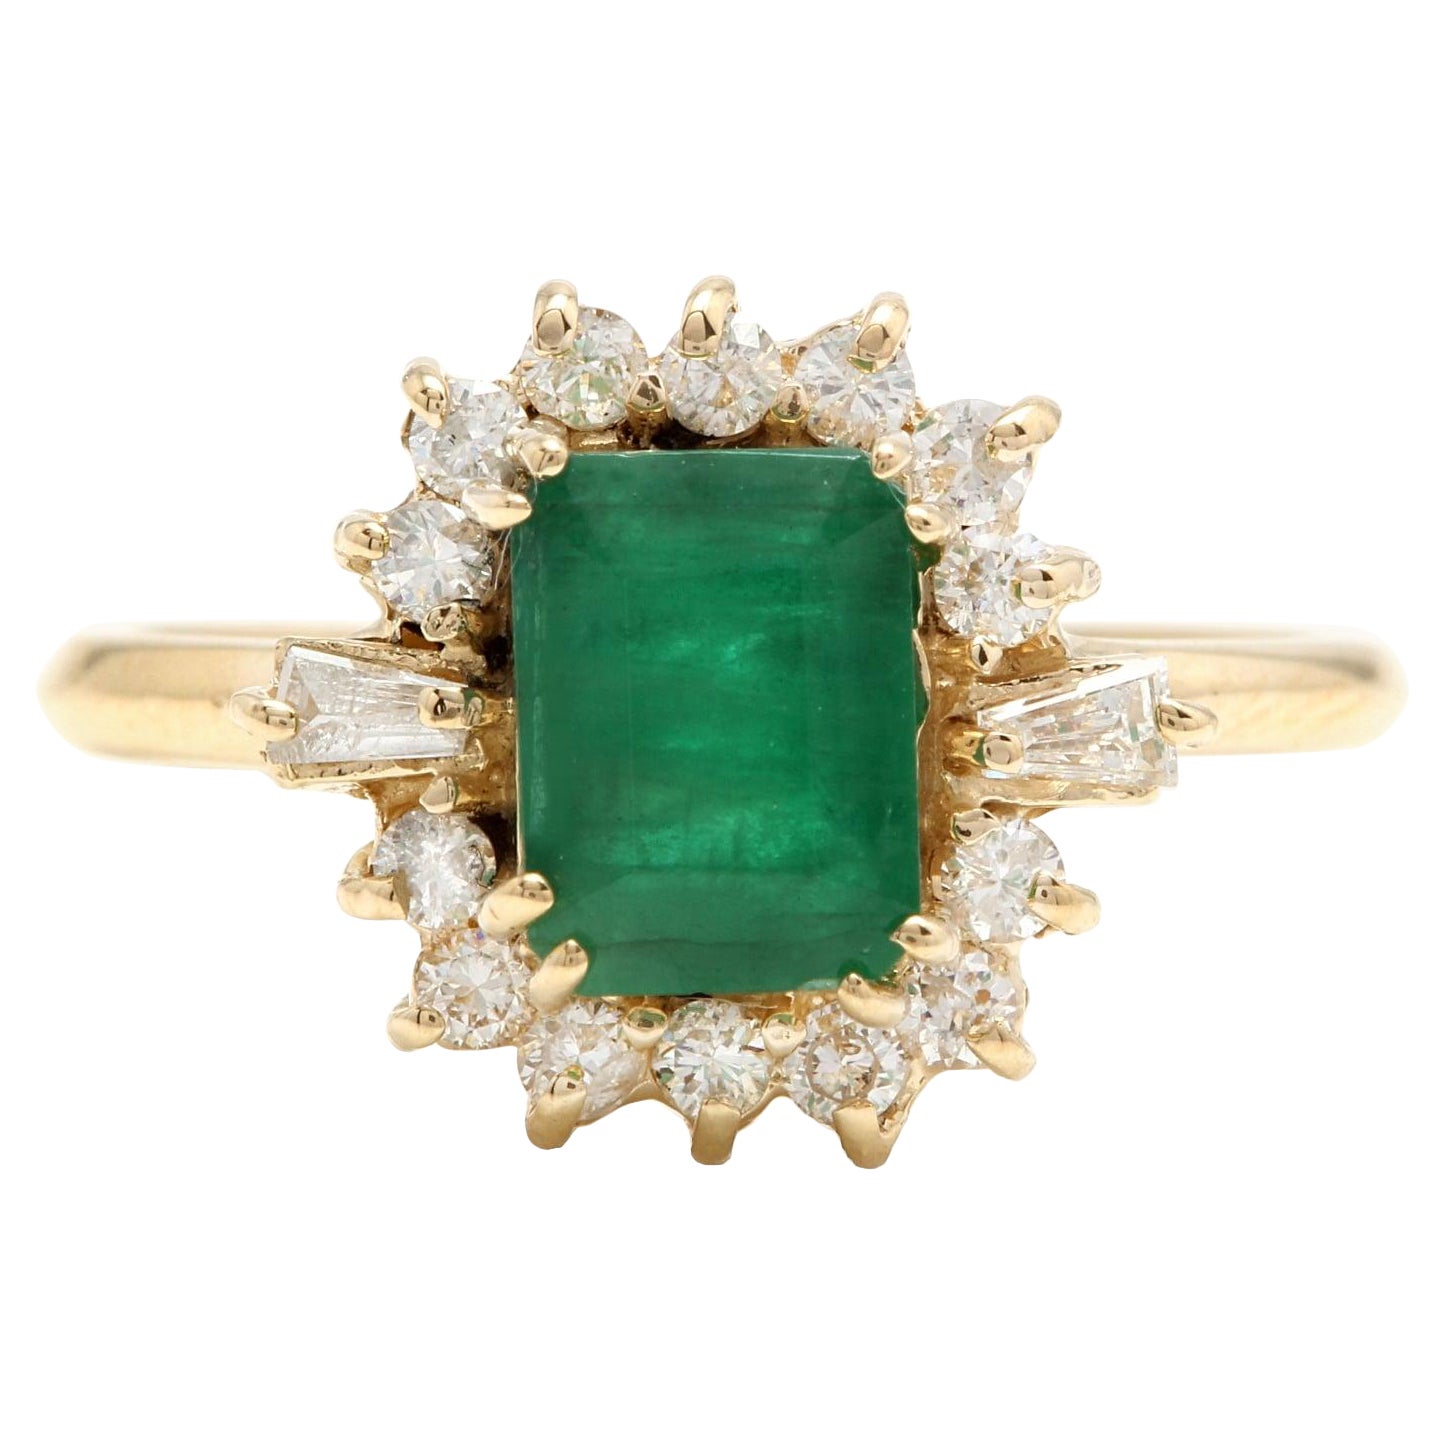 1.50 Carats Natural Emerald and Diamond 14K Solid Yellow Gold Ring